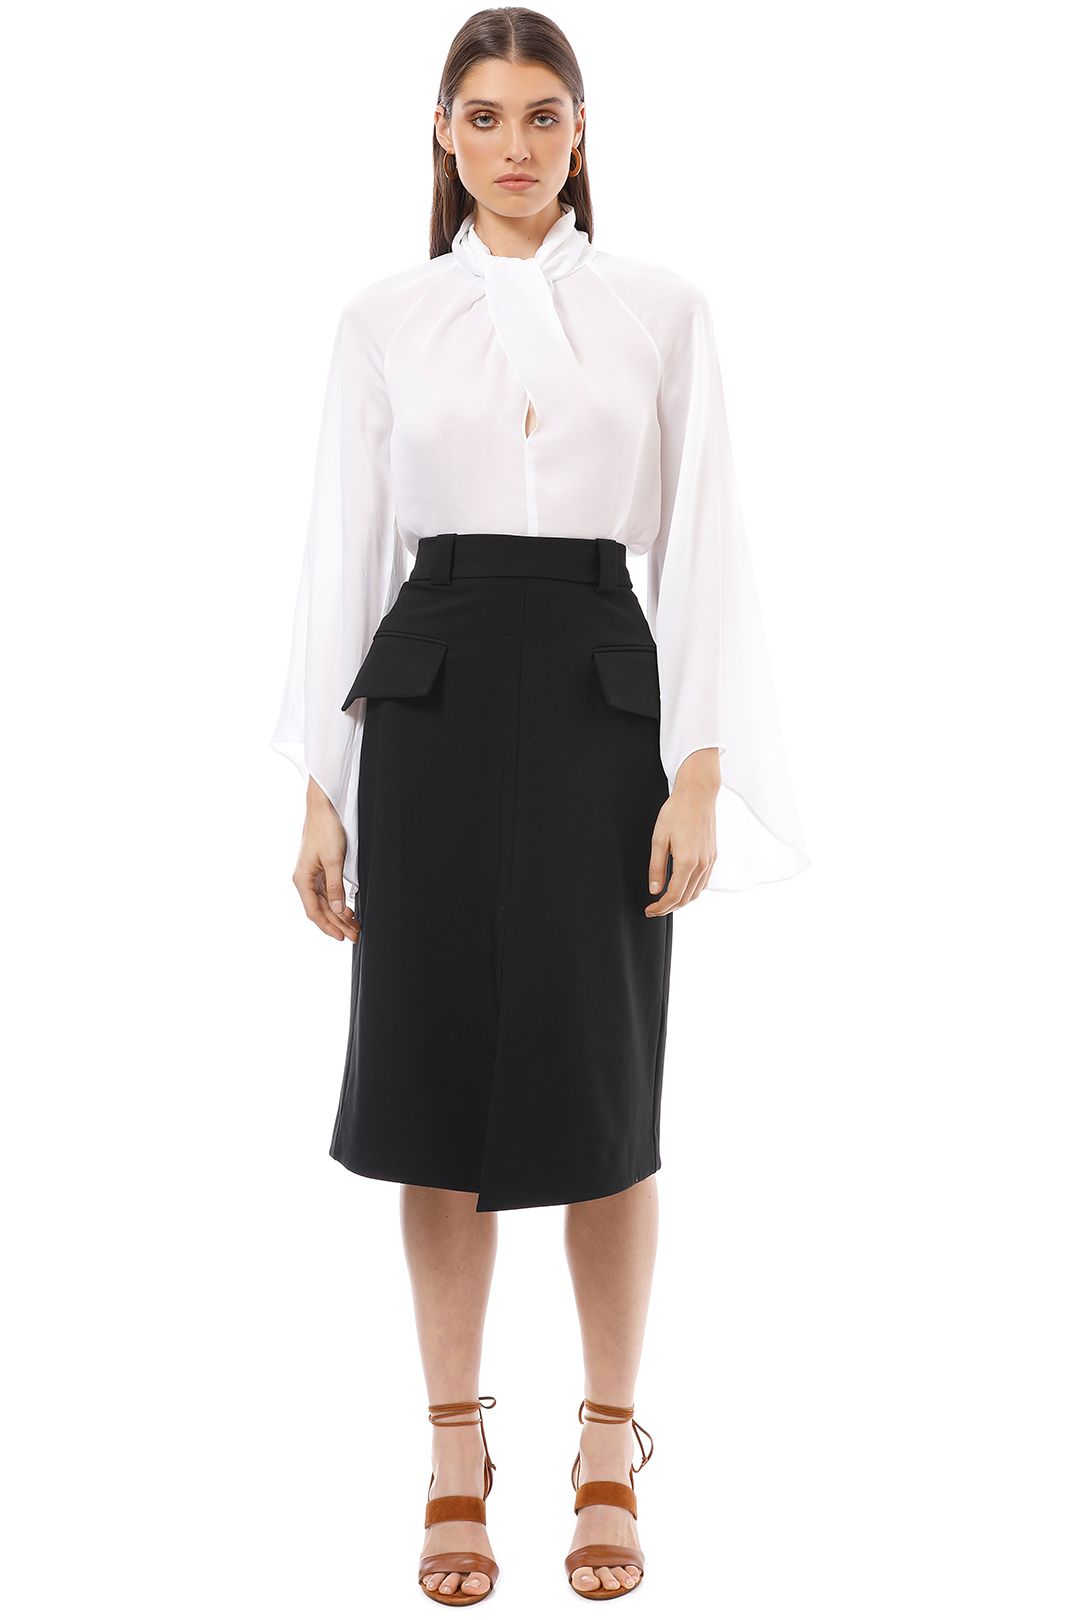 Cue - Split Front A-Line Skirt - Black - Front